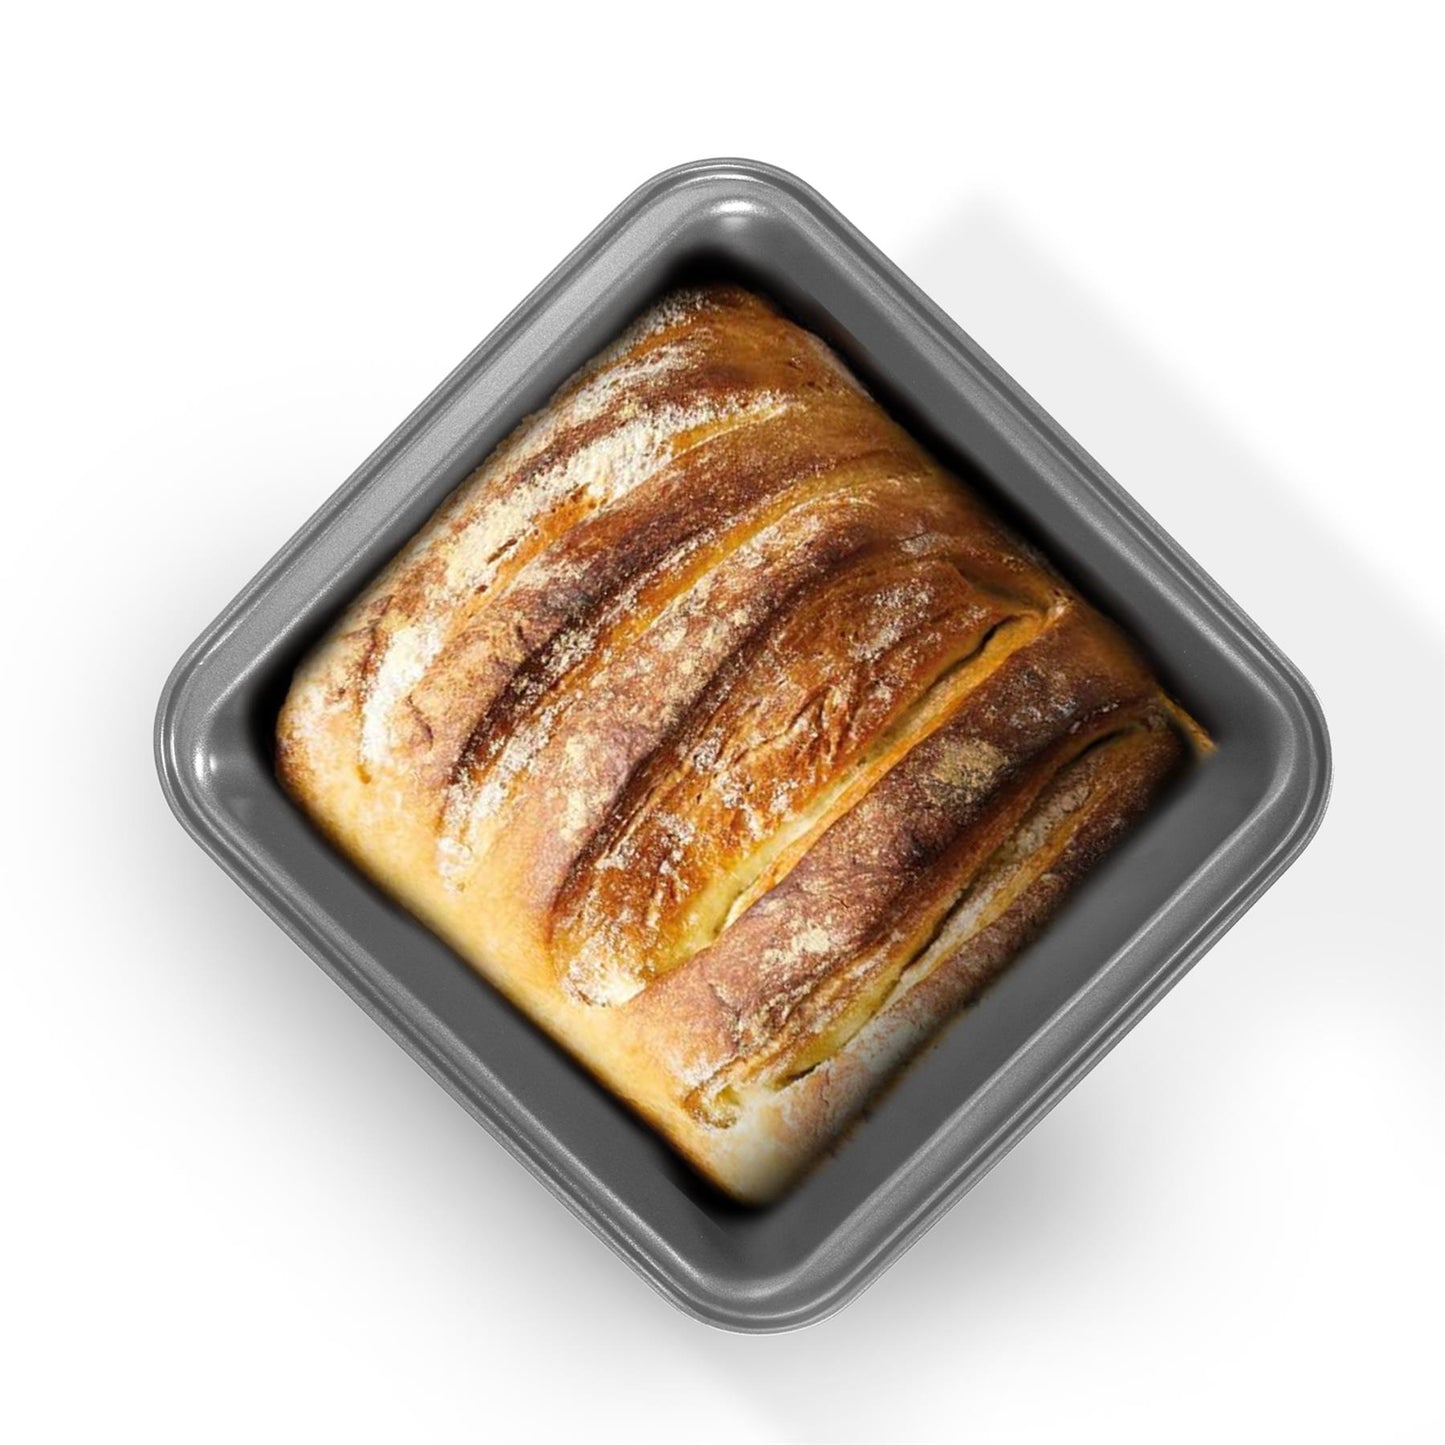 Carbon Steel Non-Stick Cake Tin, Easy-Release Baking Pan, Oven-Safe Bakeware